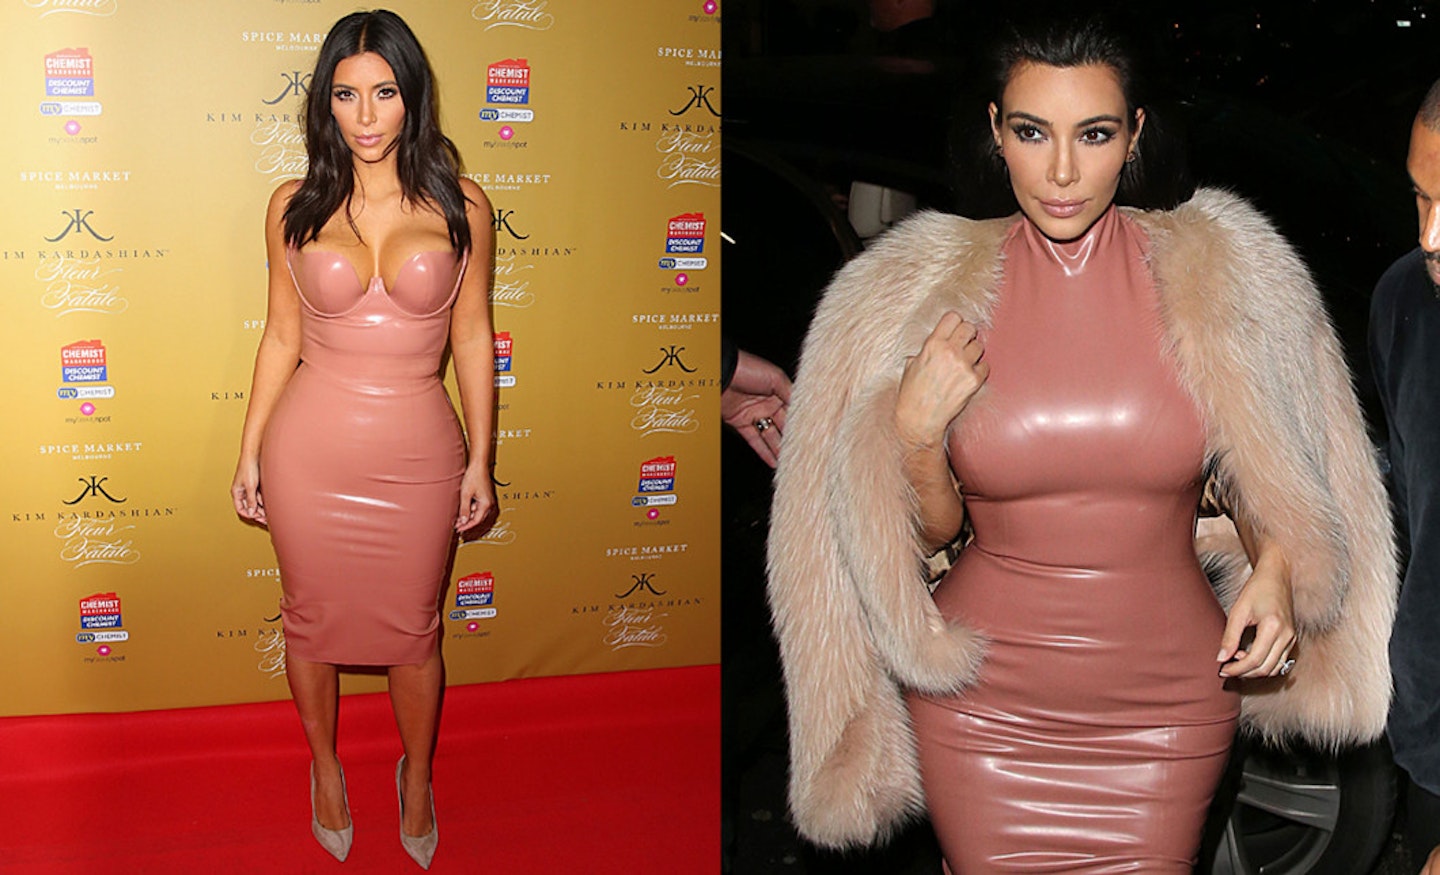 Kim Kardashian in latex dresses [Getty]